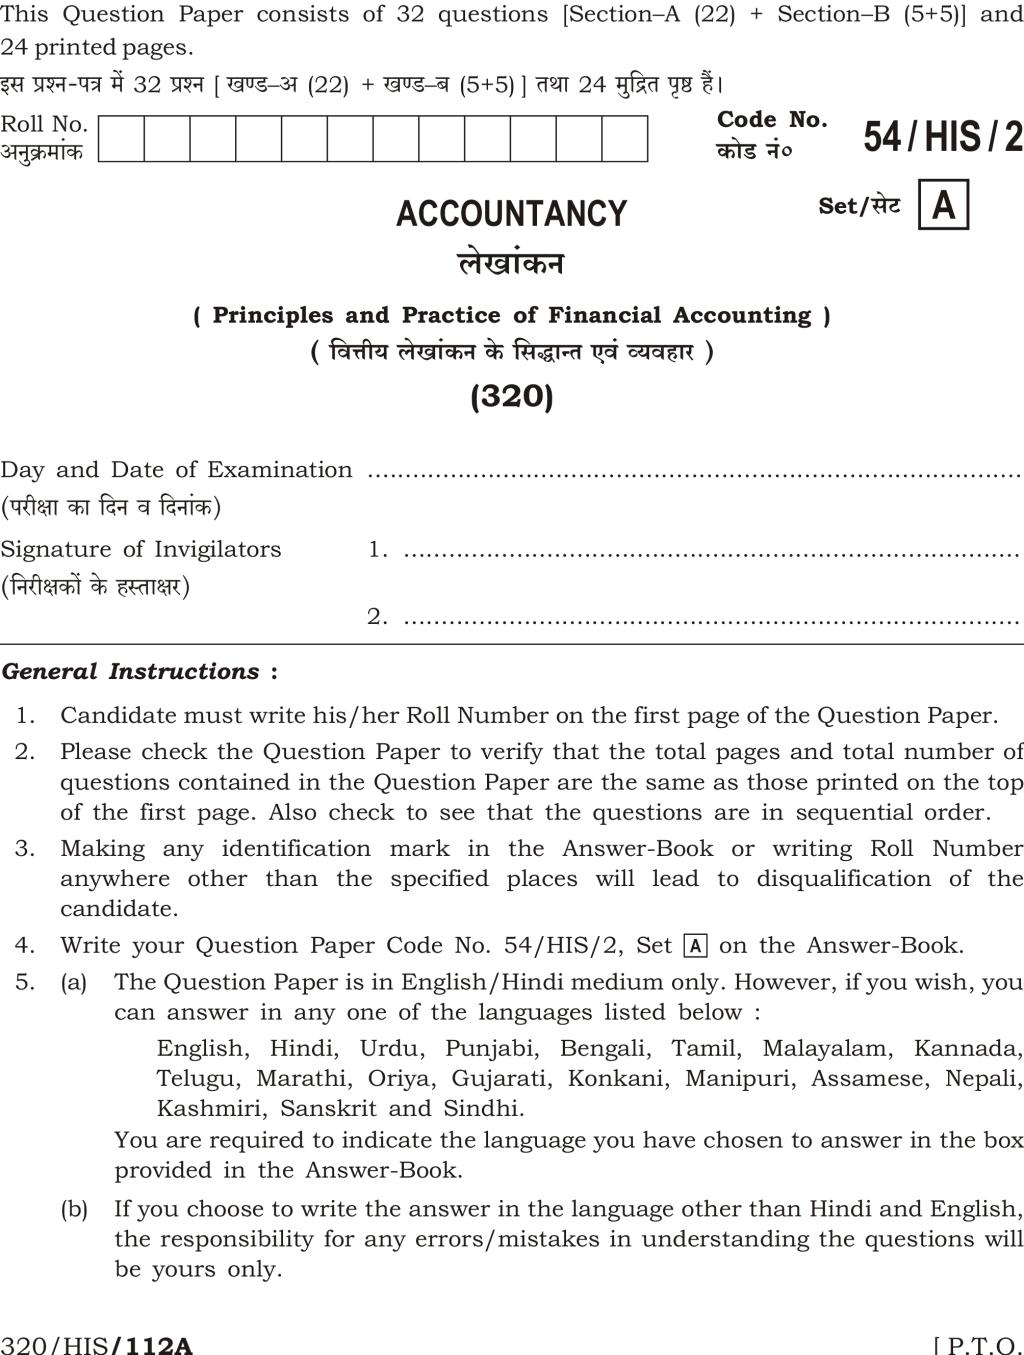 NIOS Class 12 Question Paper Apr 2017 - Accountancy - Page 1